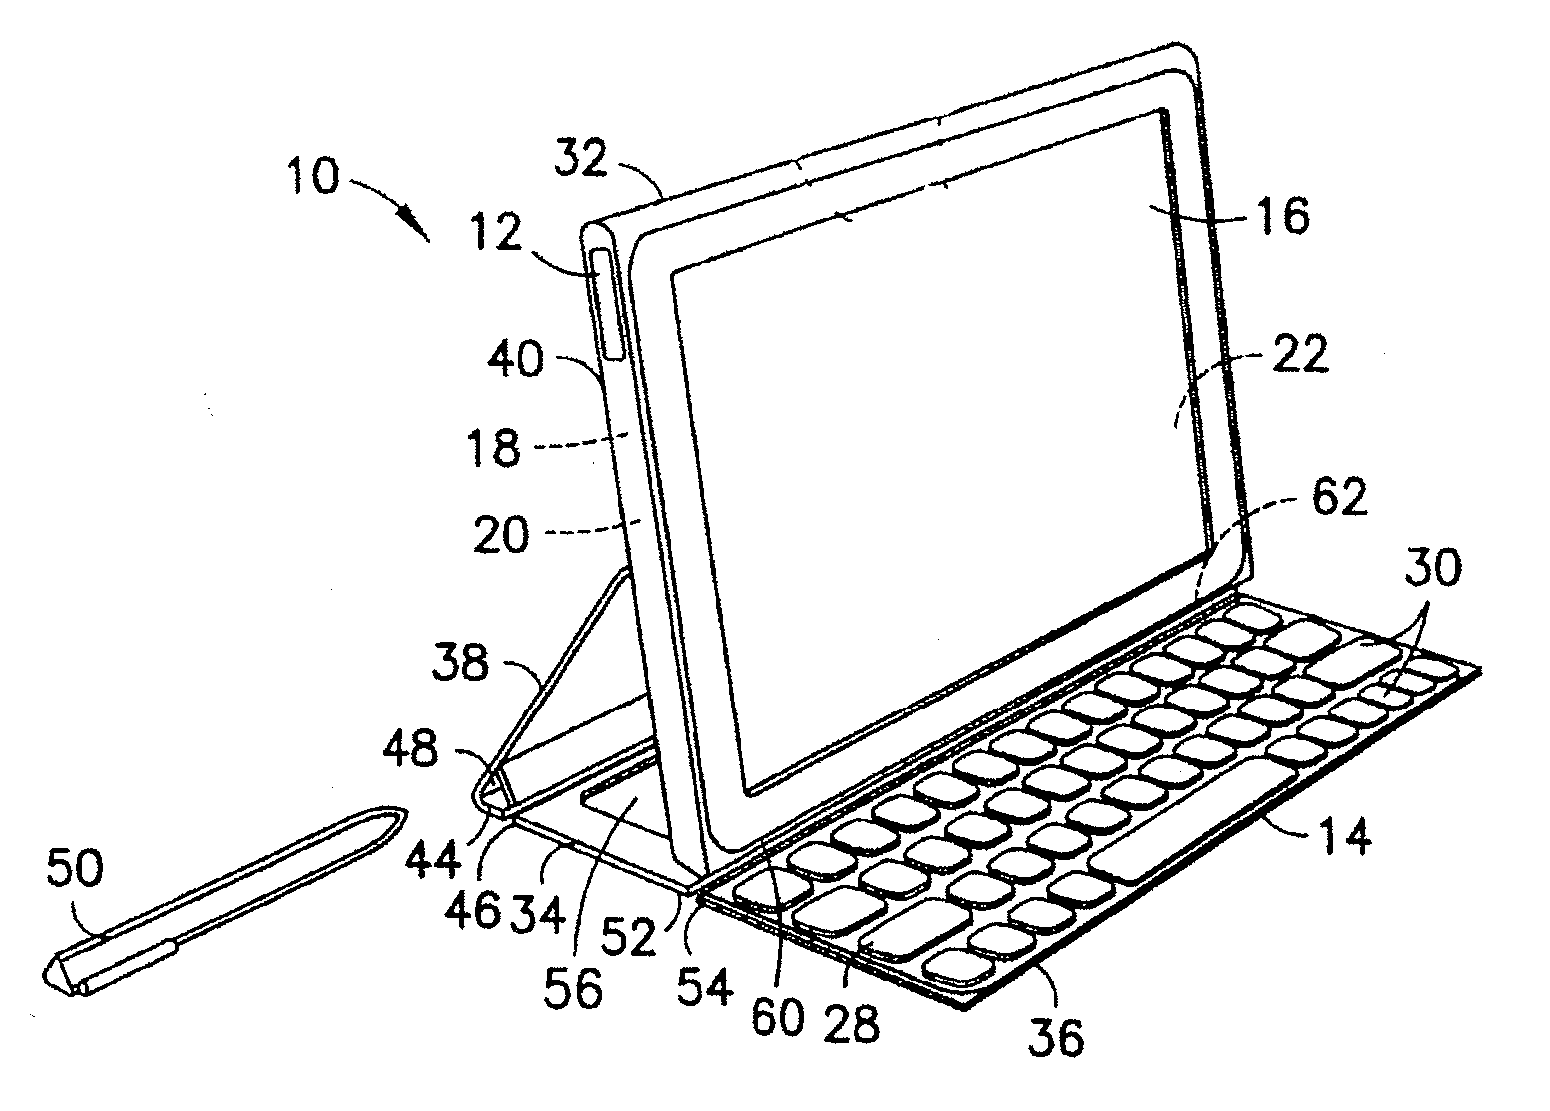 Nokia patent (Windows RT tablet with kickstand)